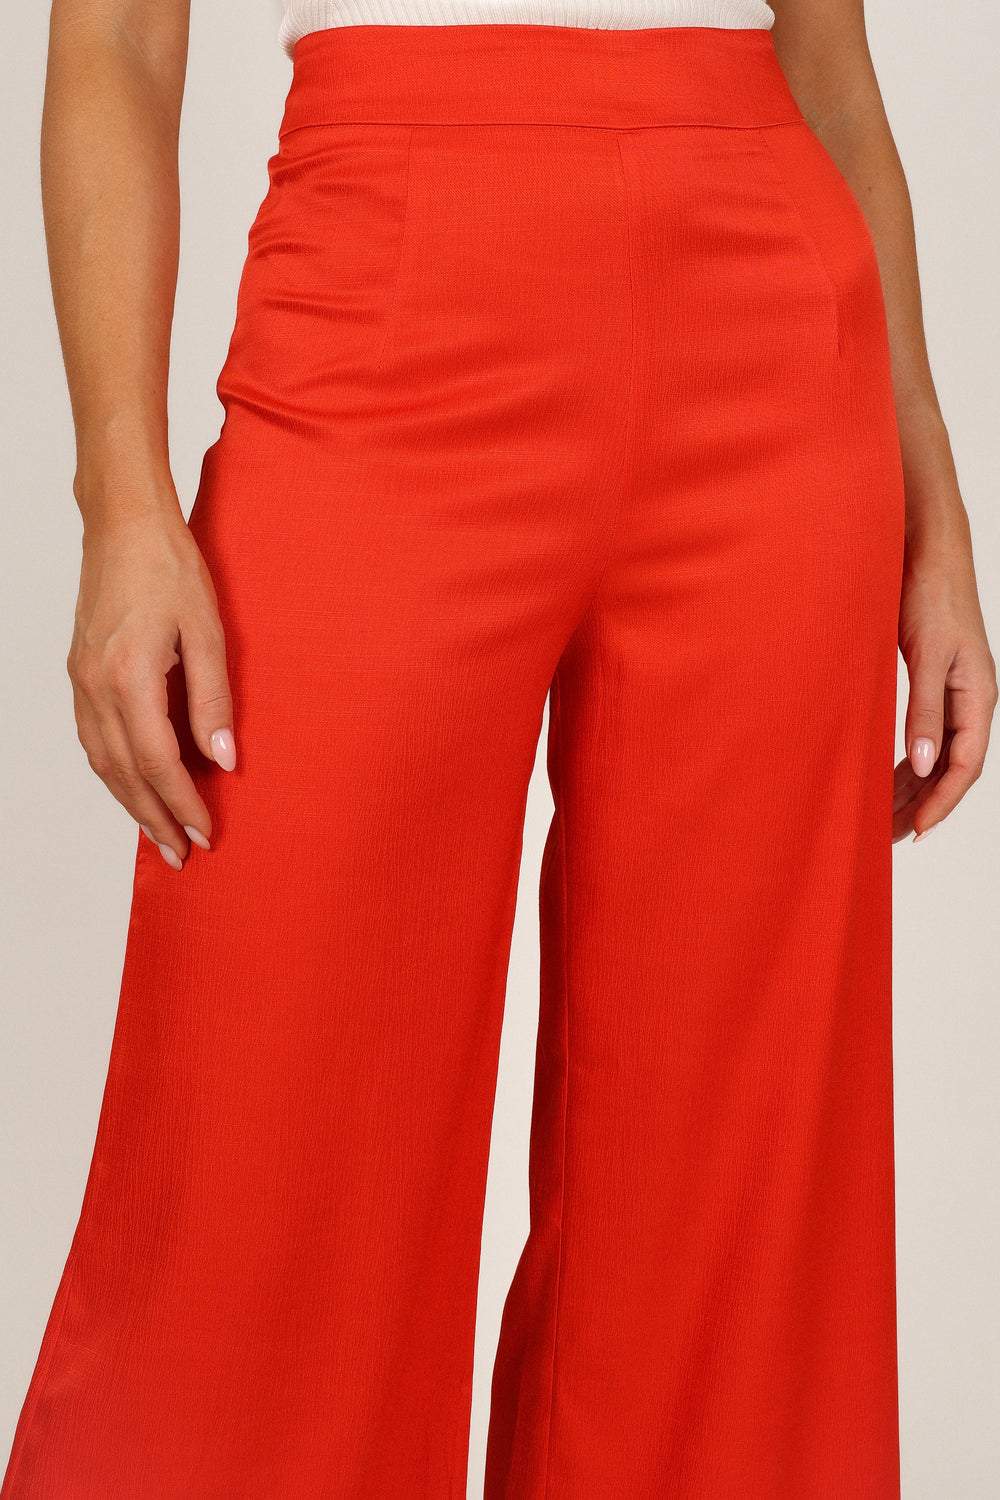 Cherry red wide-leg pants | HOWTOWEAR Fashion